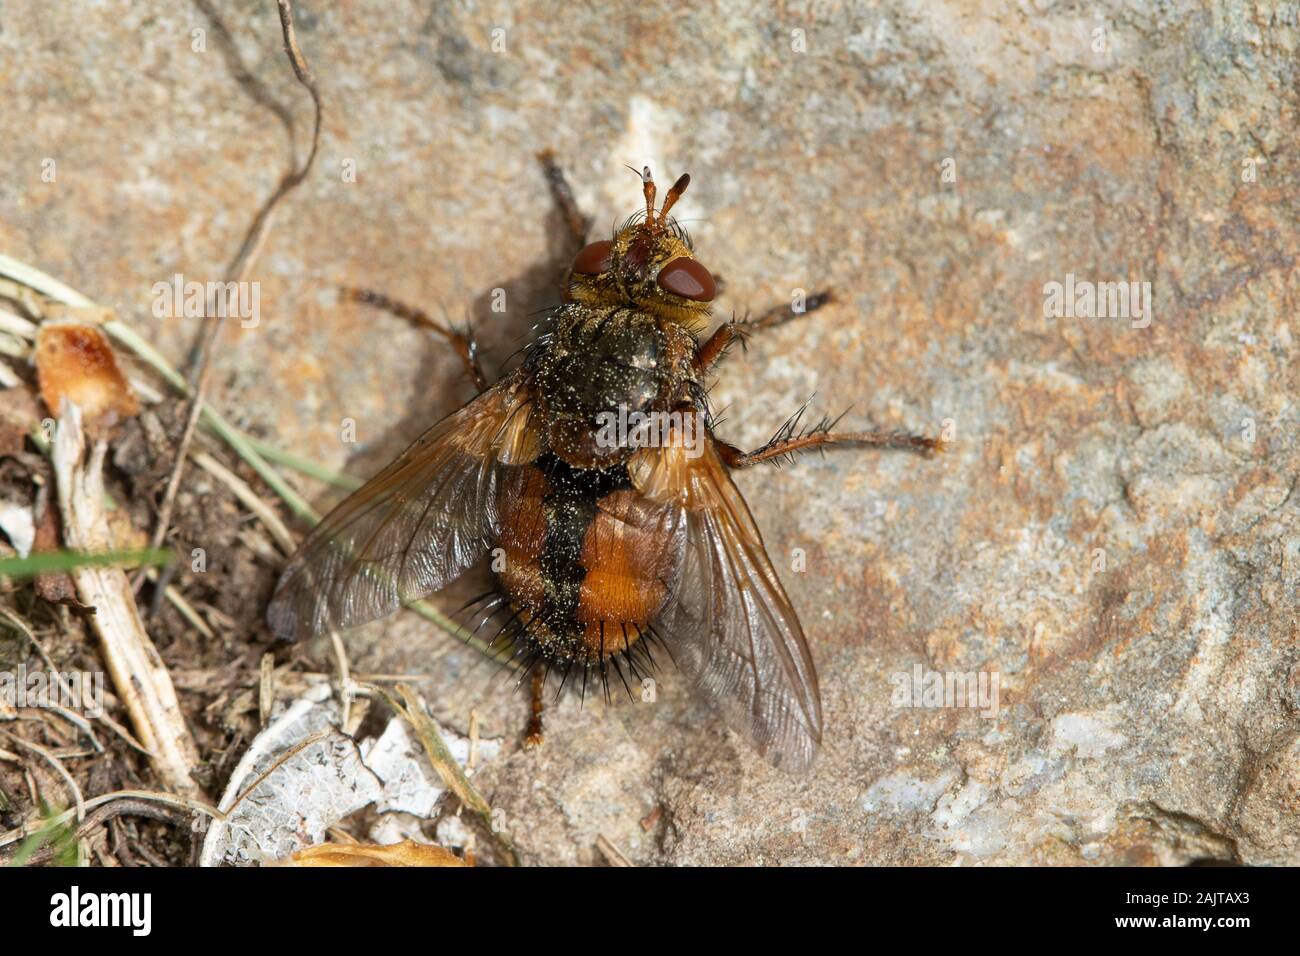 Tachina fera, a tachinid fly, resting on a rock Stock Photo